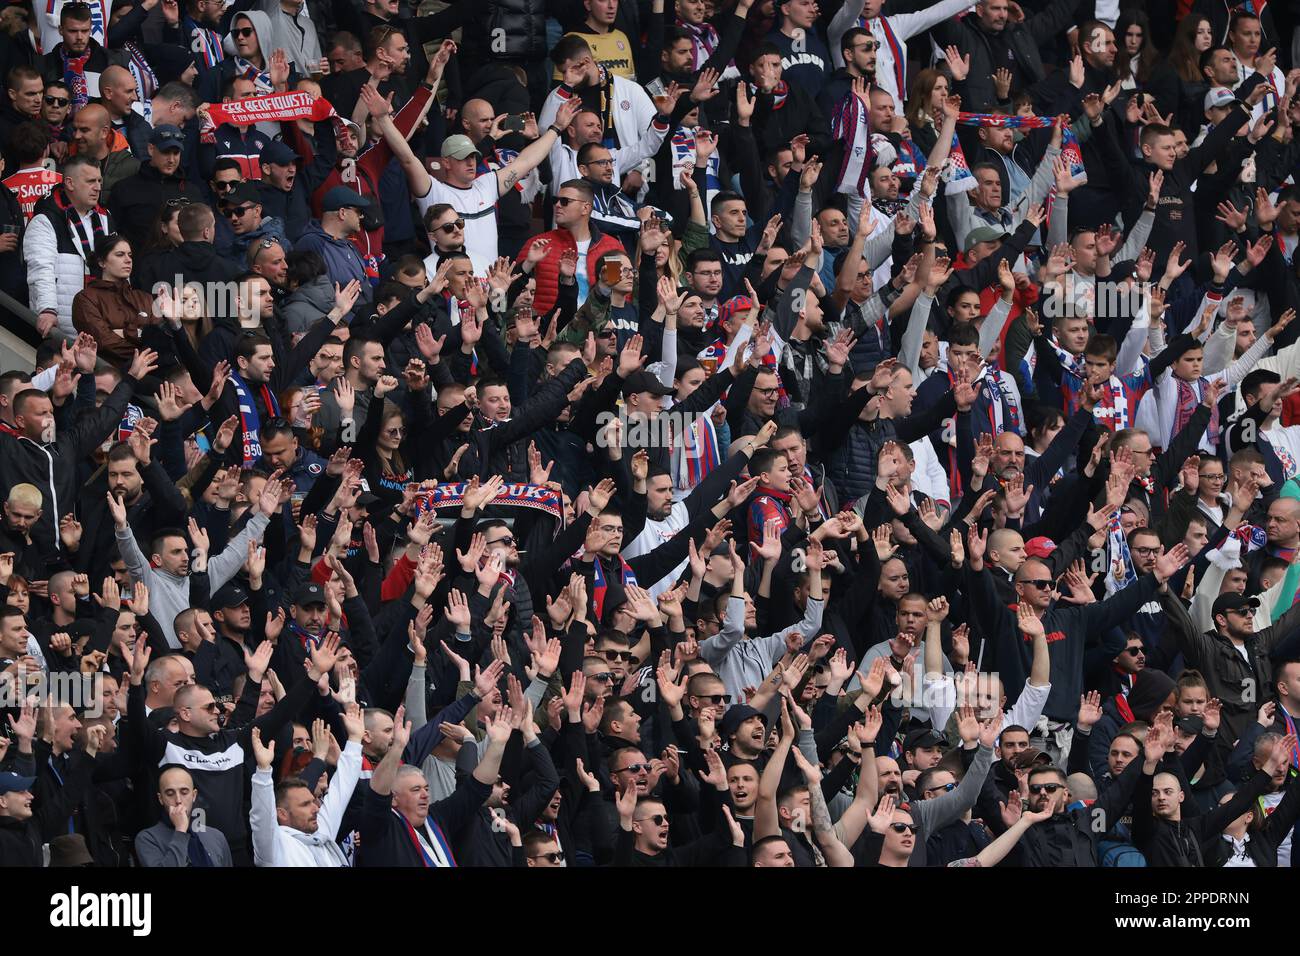 Football Report on X: Just look at that crowd for Hajduk Split U19!   / X